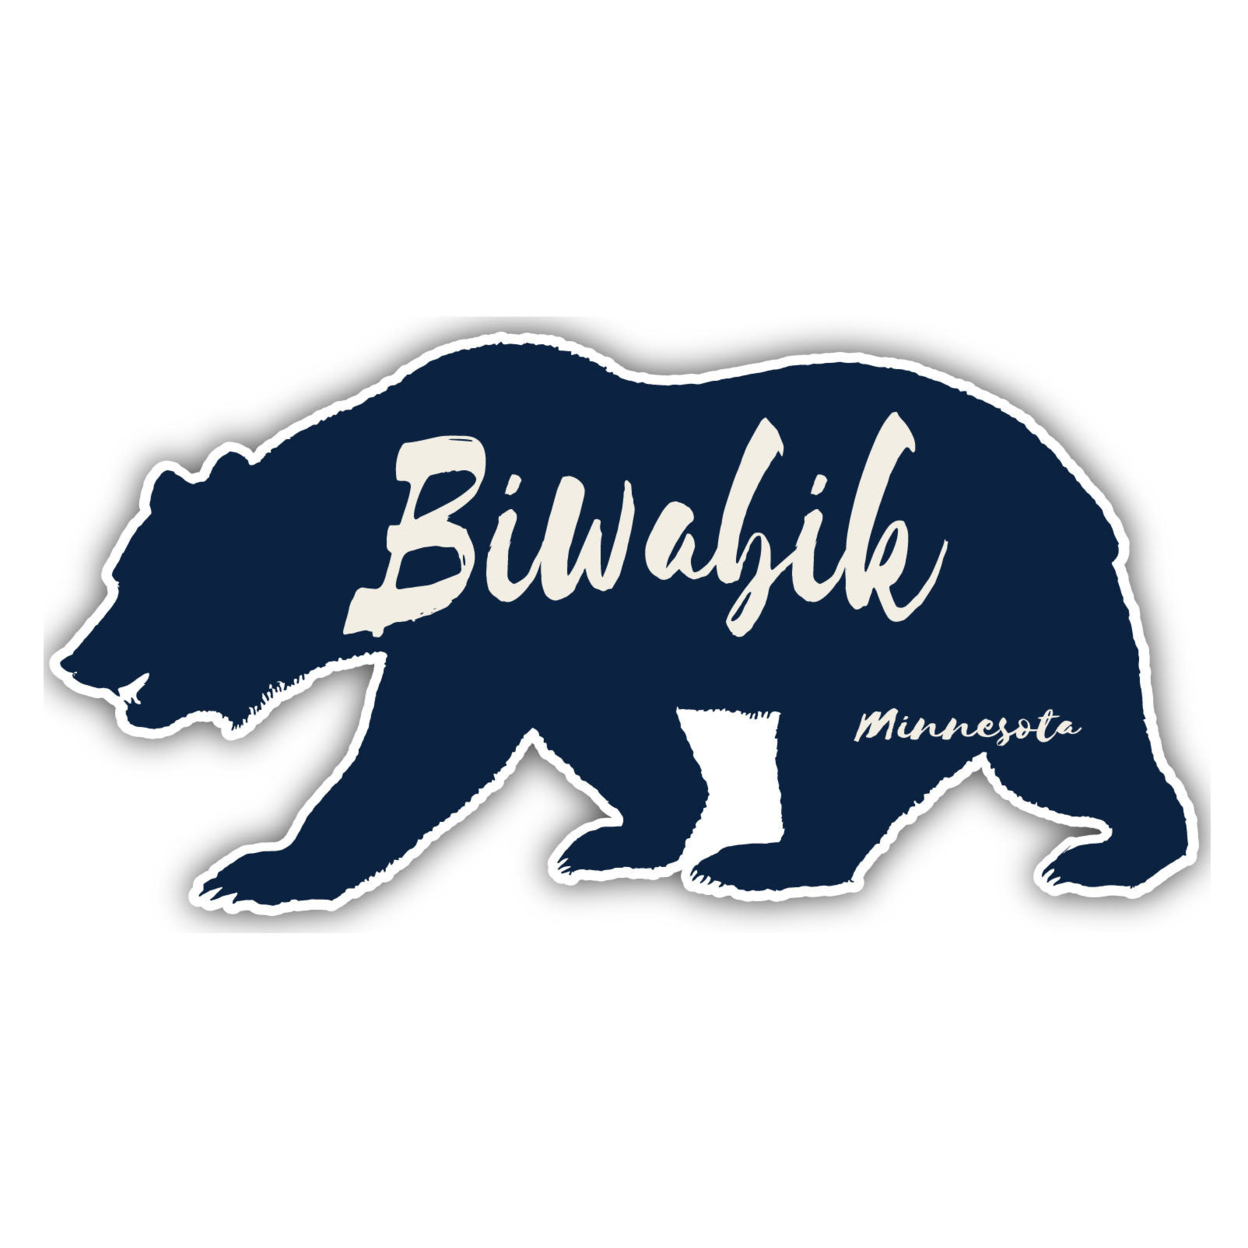 Biwabik Minnesota Souvenir Decorative Stickers (Choose Theme And Size) - 4-Pack, 2-Inch, Tent